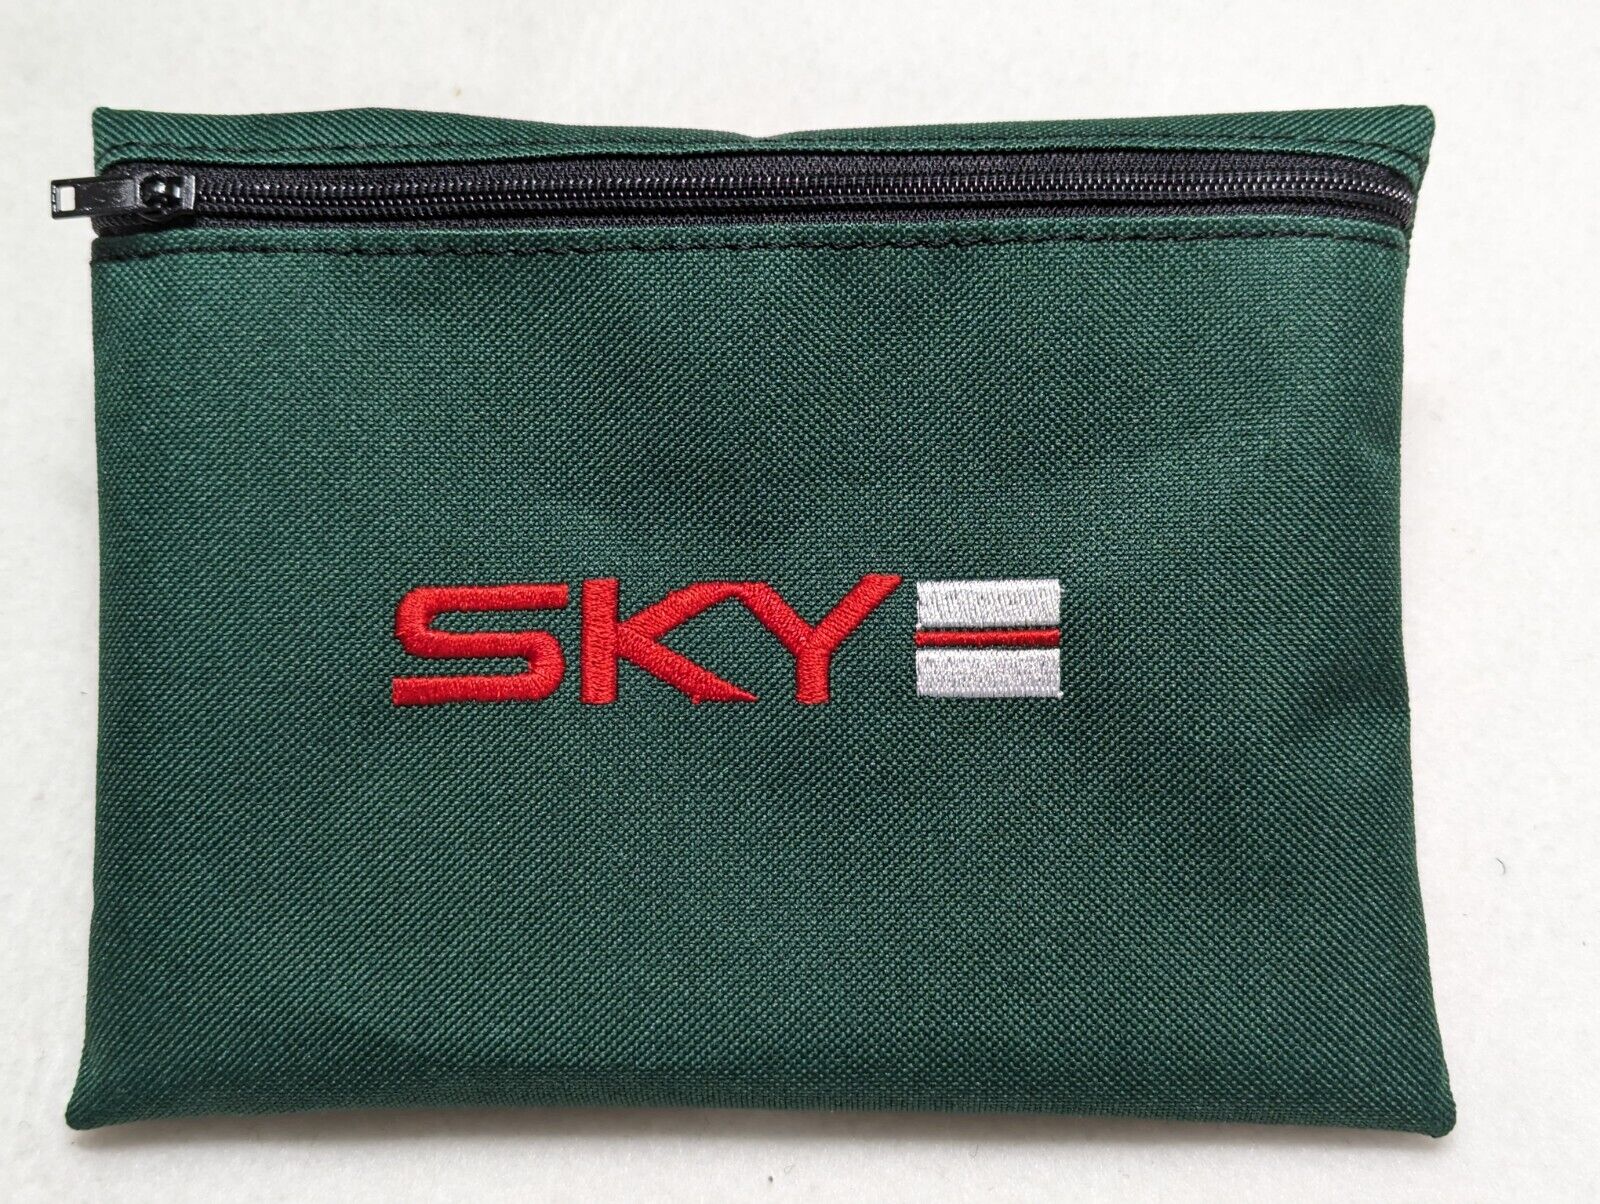 Saturn Sky Redline Forrest Green Glovebox bag W / Red Embroidery - New